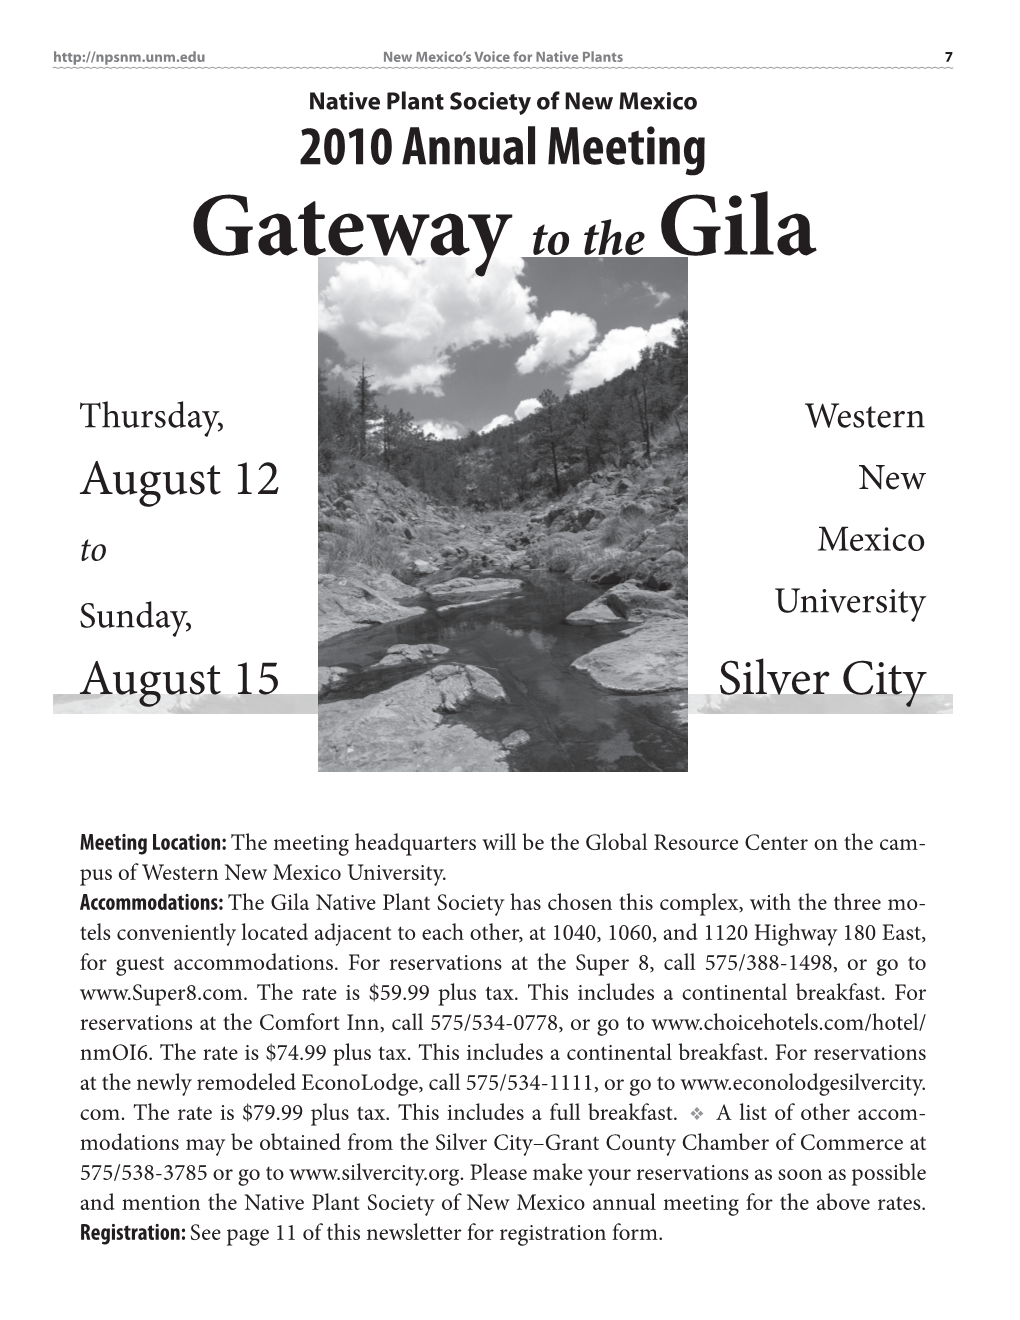 Gateway to the Gila